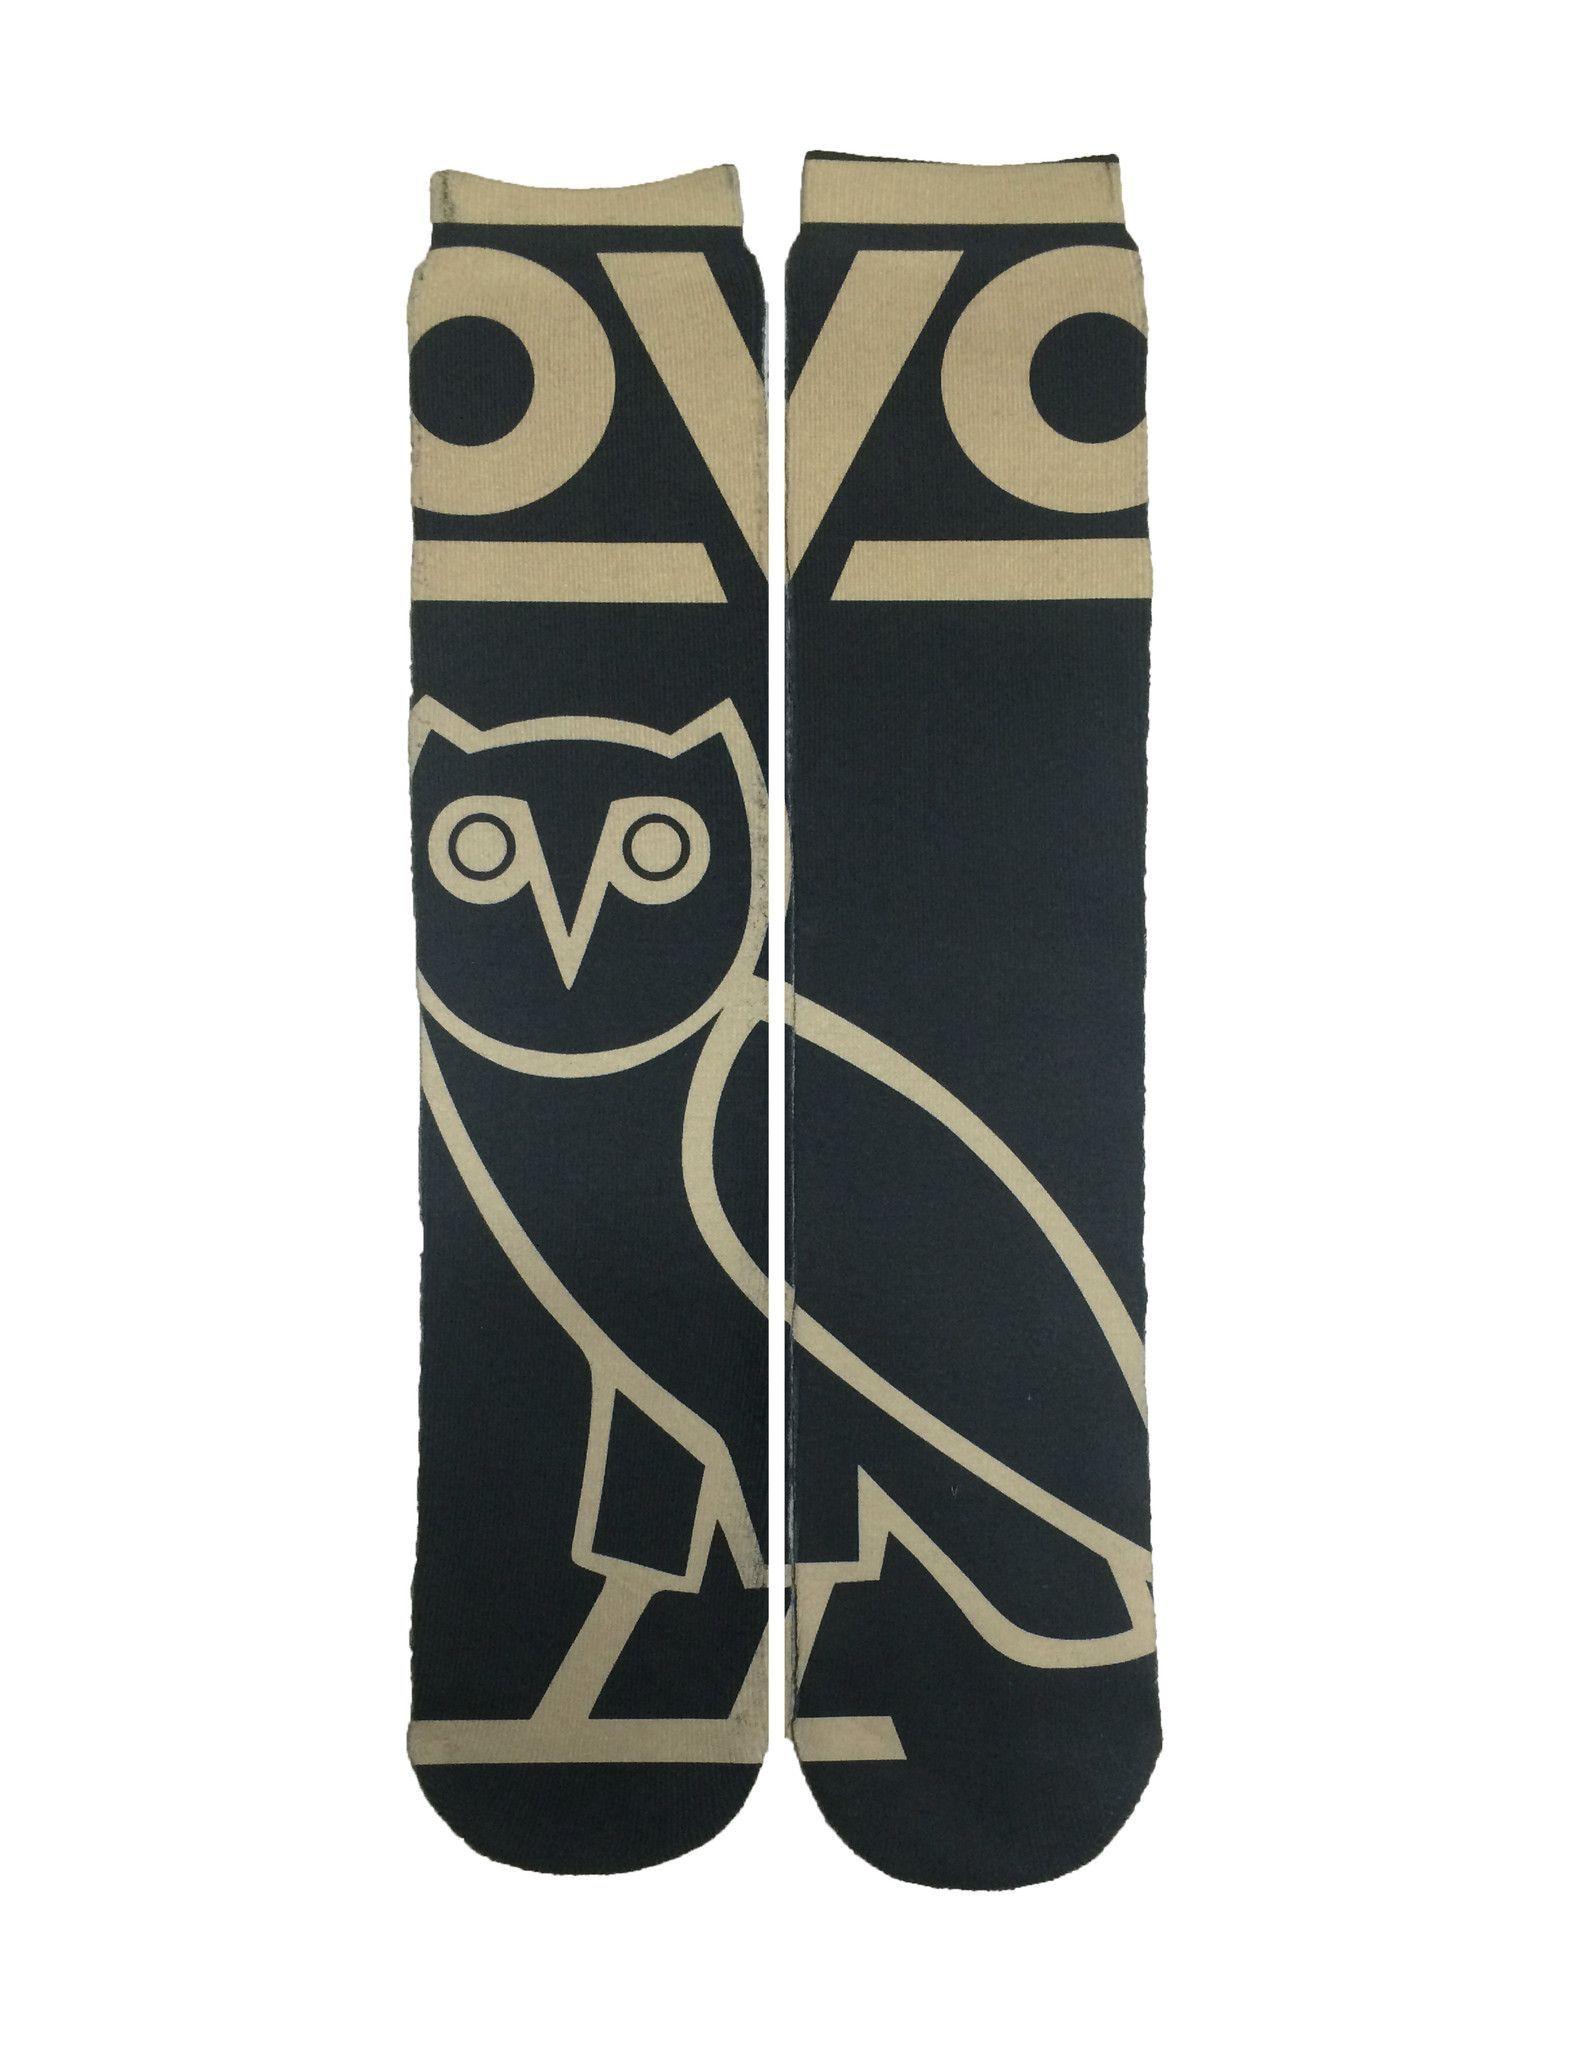 OVOXO Owl Logo - Drake OVO Classic Owl Logo Socks | Fashion | Socks, Mens fashion ...